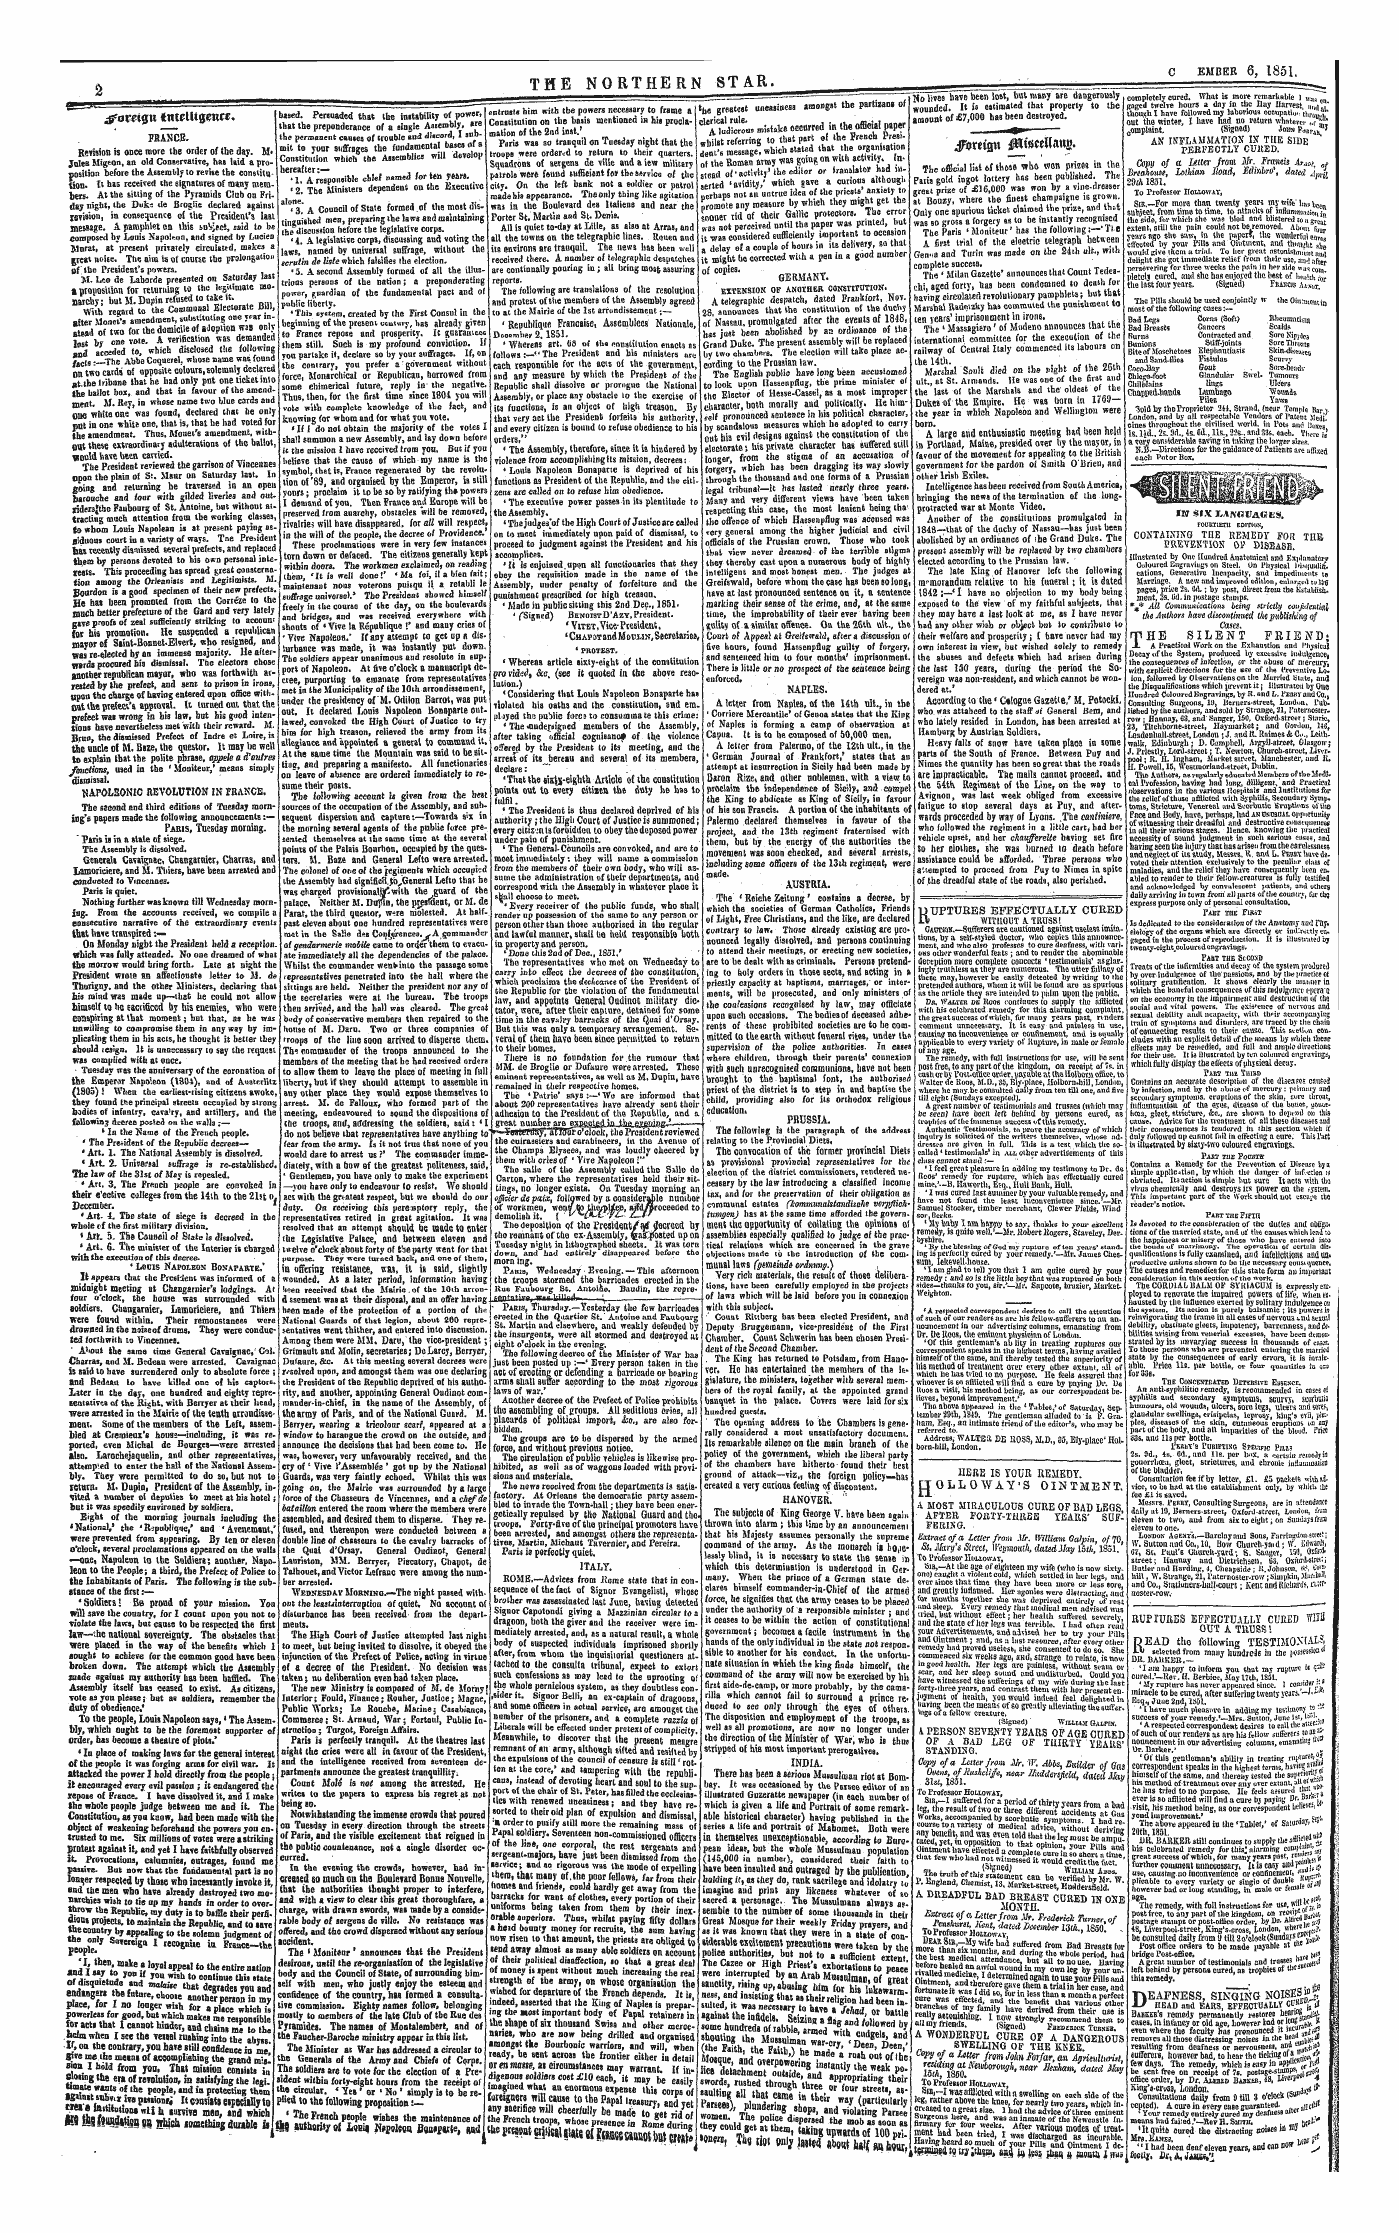 Northern Star (1837-1852): jS F Y, 1st edition - Jfroffltt Fltfoctttott&